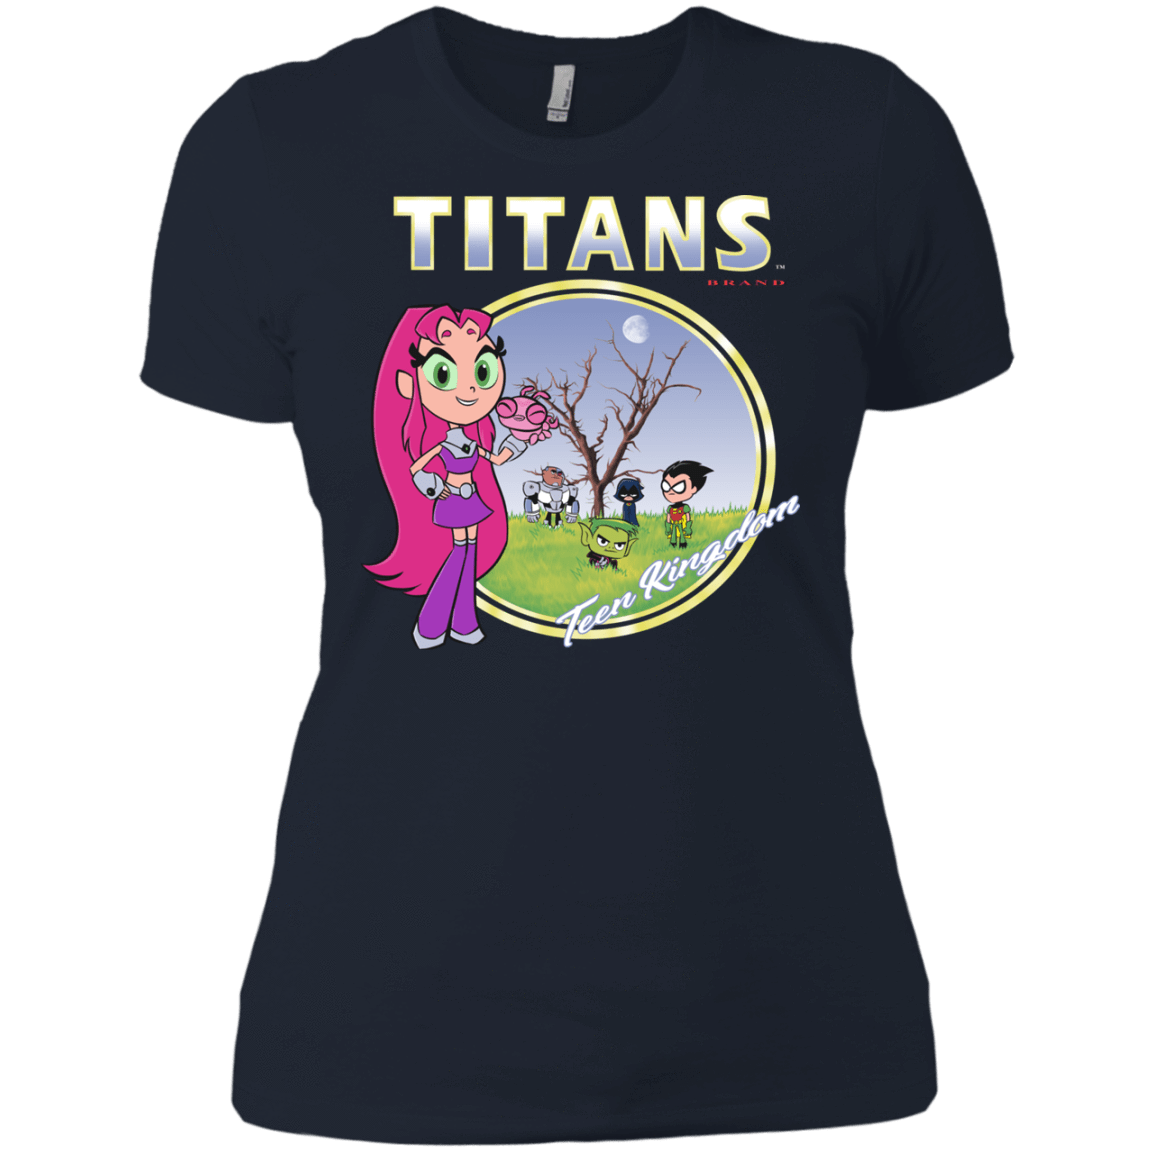 T-Shirts Midnight Navy / X-Small Titans Women's Premium T-Shirt